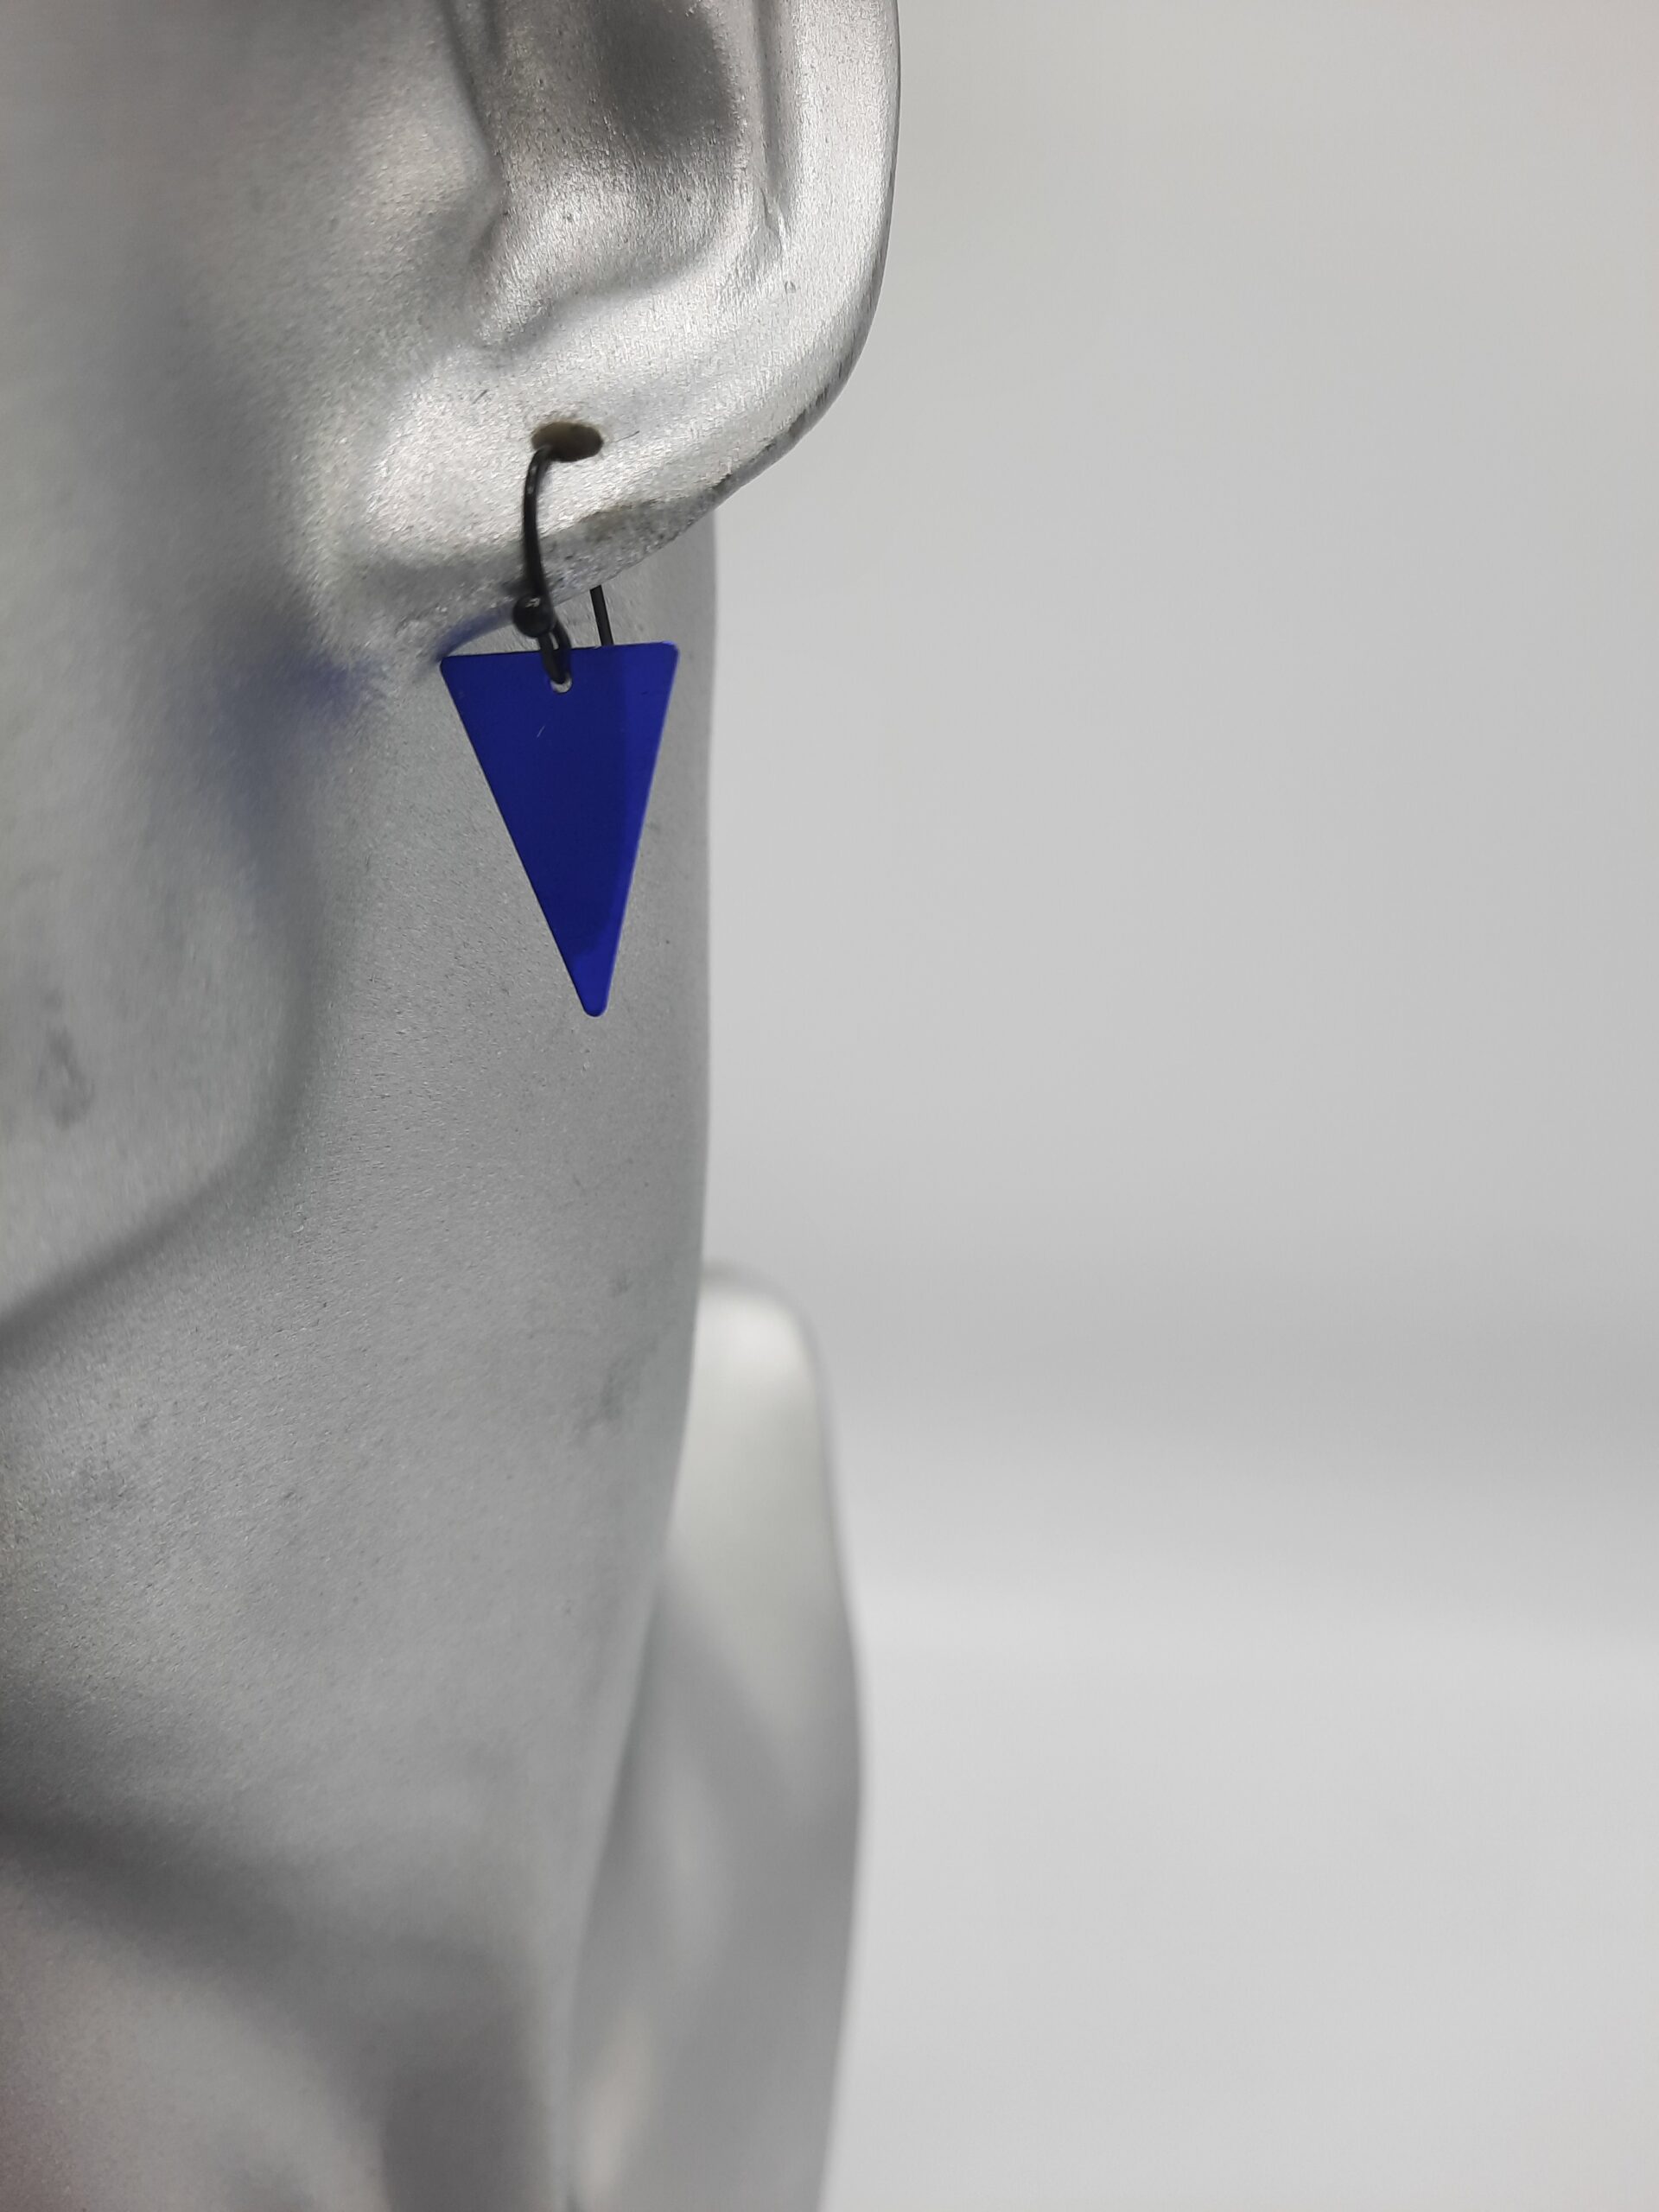 wolfkat oorbellen geometrics driehoeken driehoek electric blue